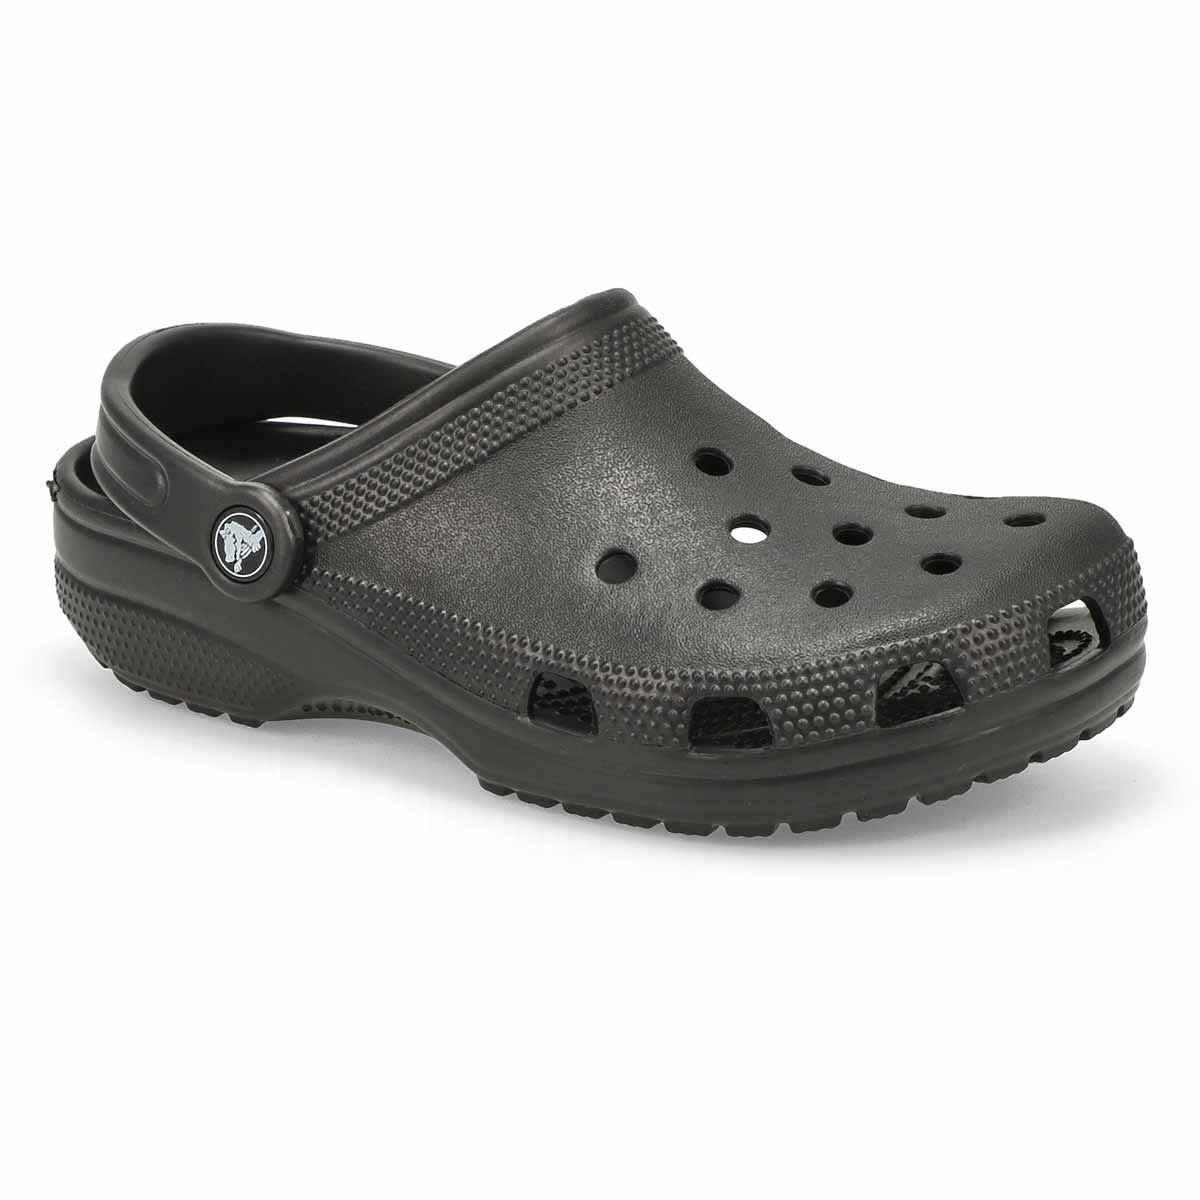 Crocs Mens Classic Lined Slip On Casual Clogs Slate Grey/smoke Size ...